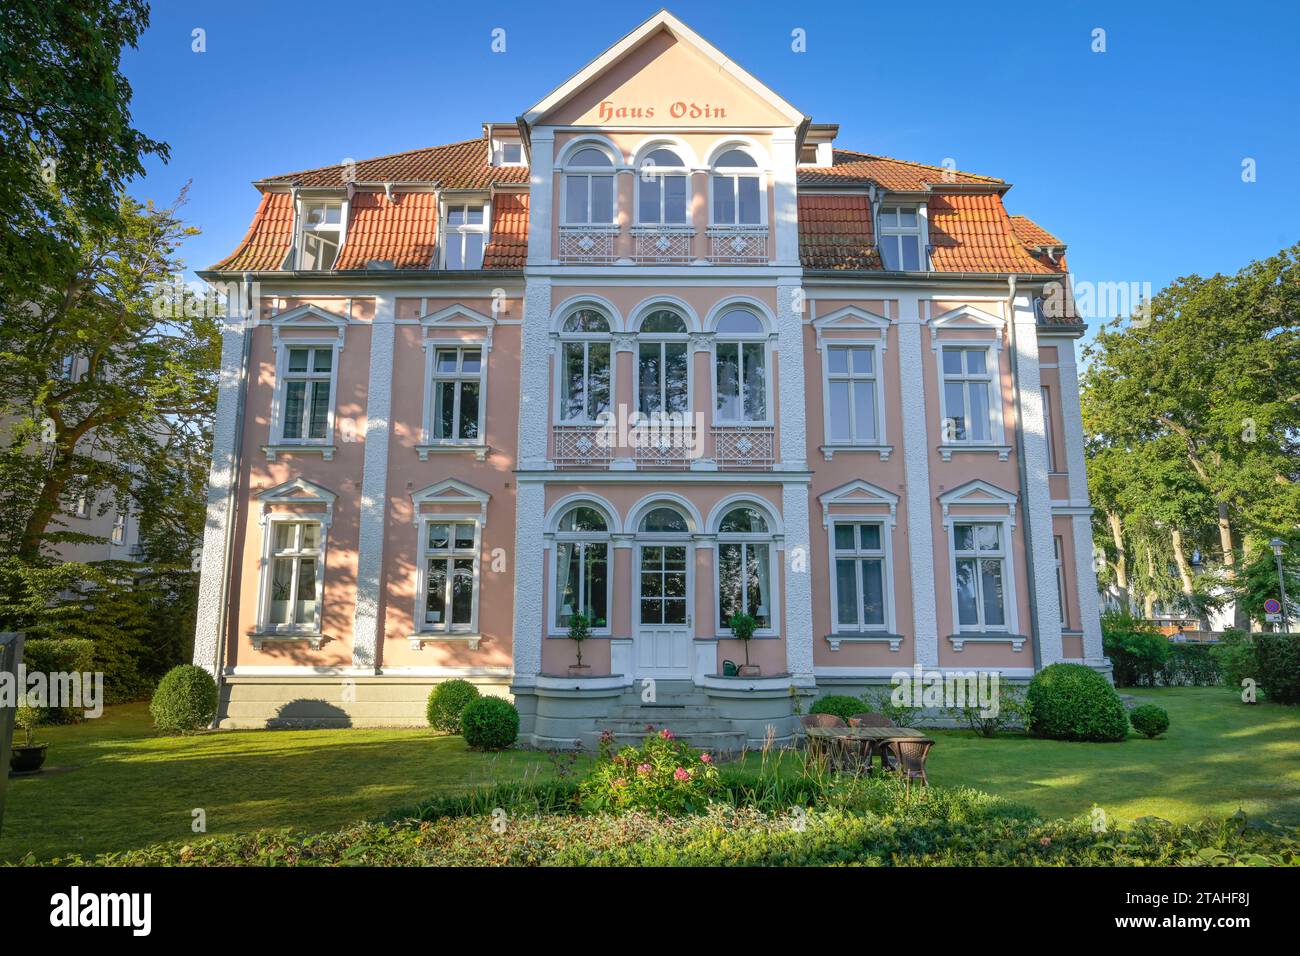 Villa Haus Odin, Delbrückstraße, Heringsdorf, Usedom, Mecklenburg-Vorpommern, Deutschland *** Villa Haus Odin, Delbrückstraße, Heringsdorf, Usedom, Mecklenburg-Vorpommern, Allemagne Banque D'Images